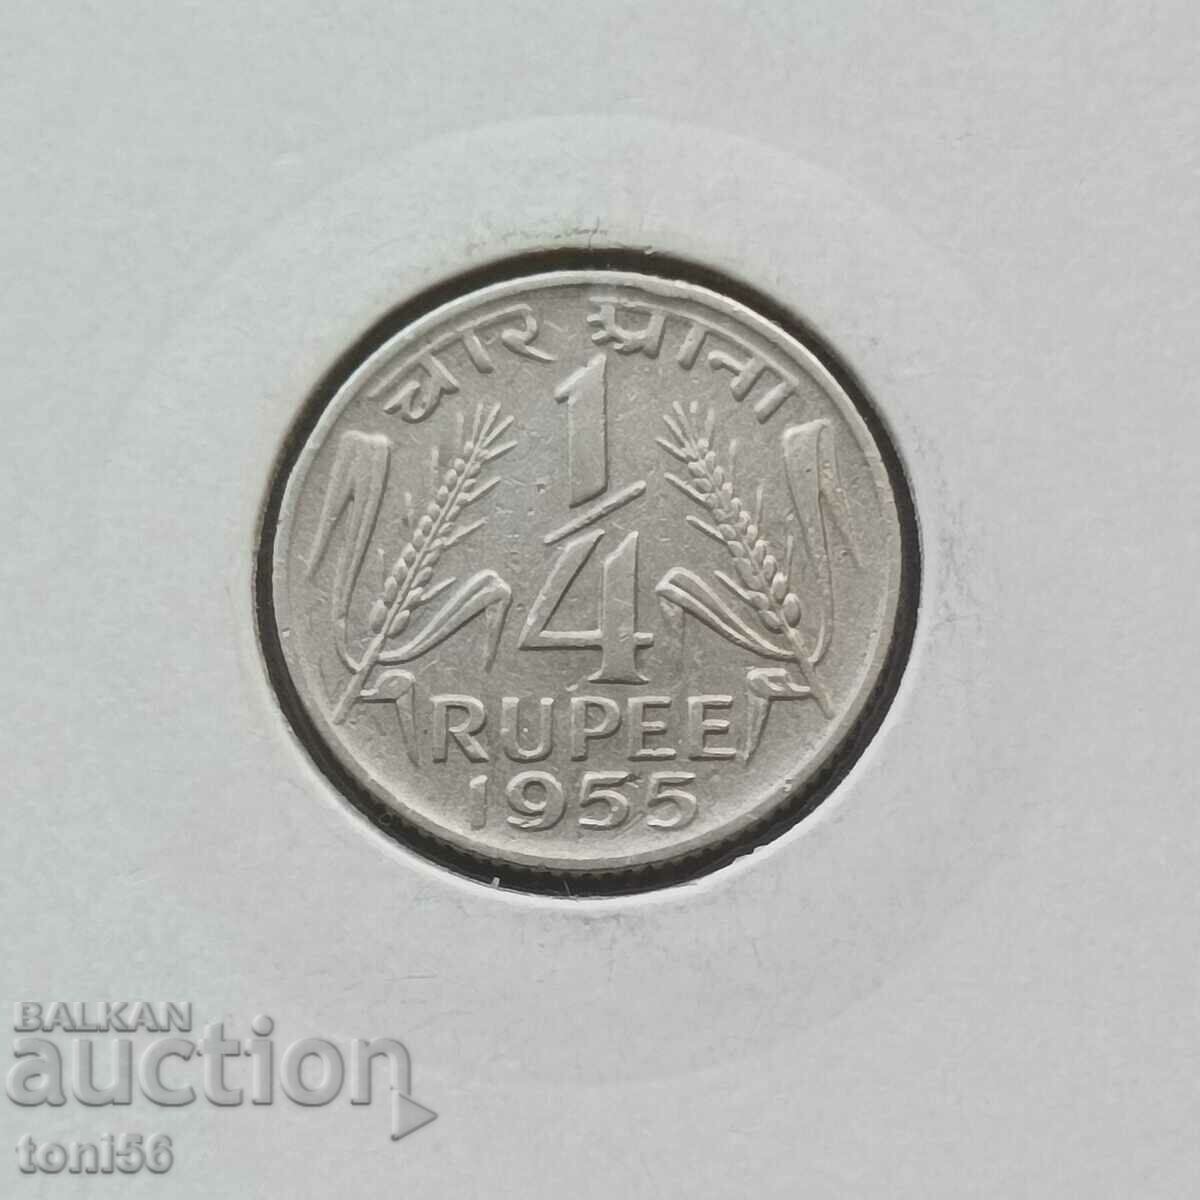 India 1/4 rupee 1955 - small lion